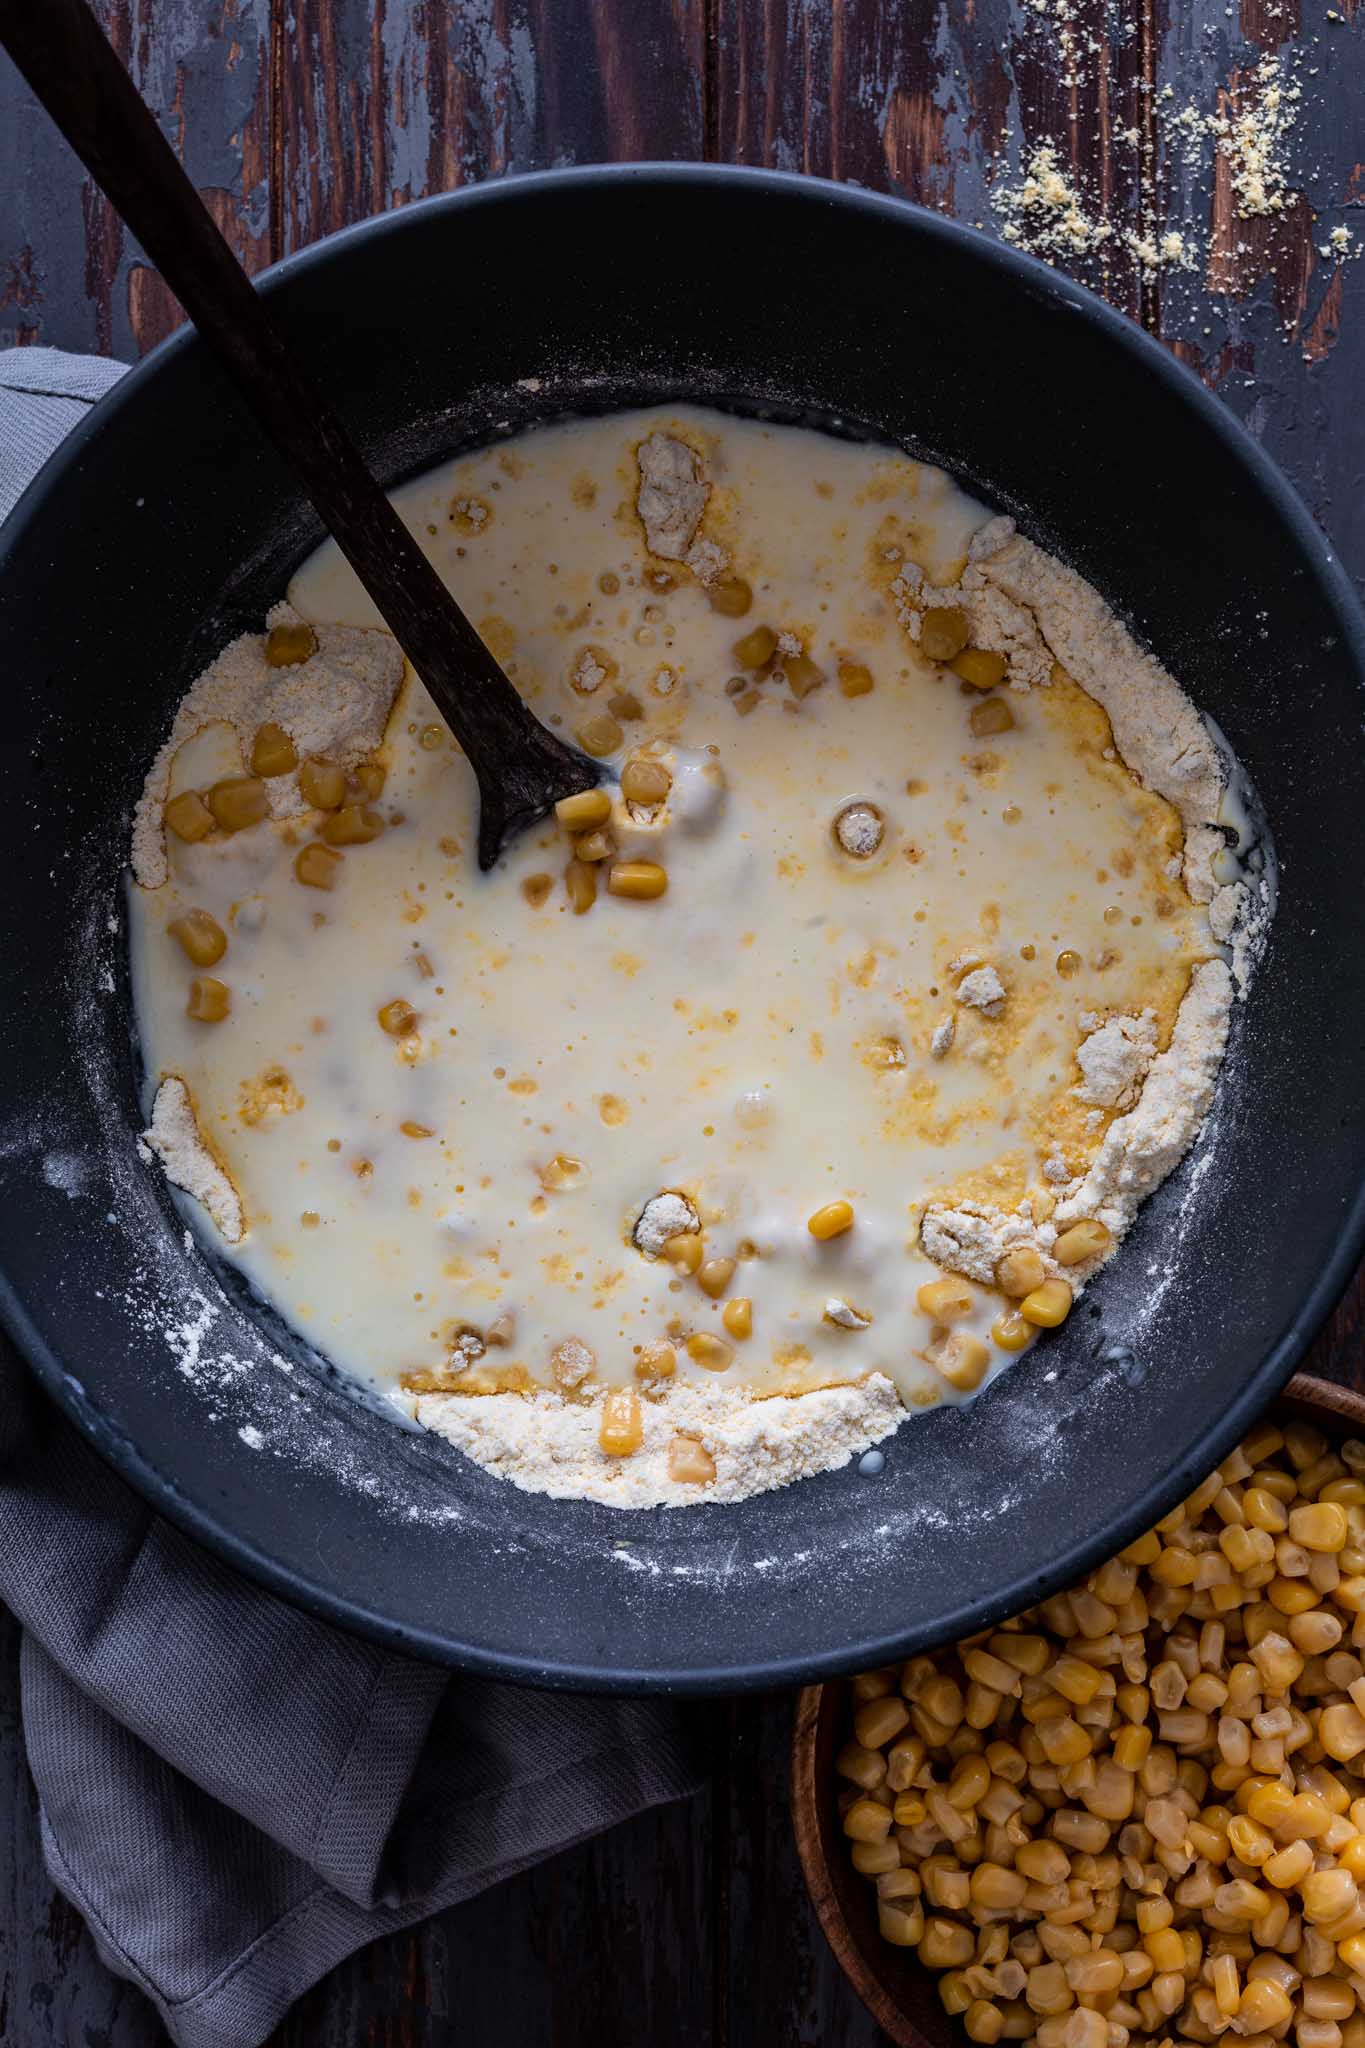 Cornbread batter with kernels